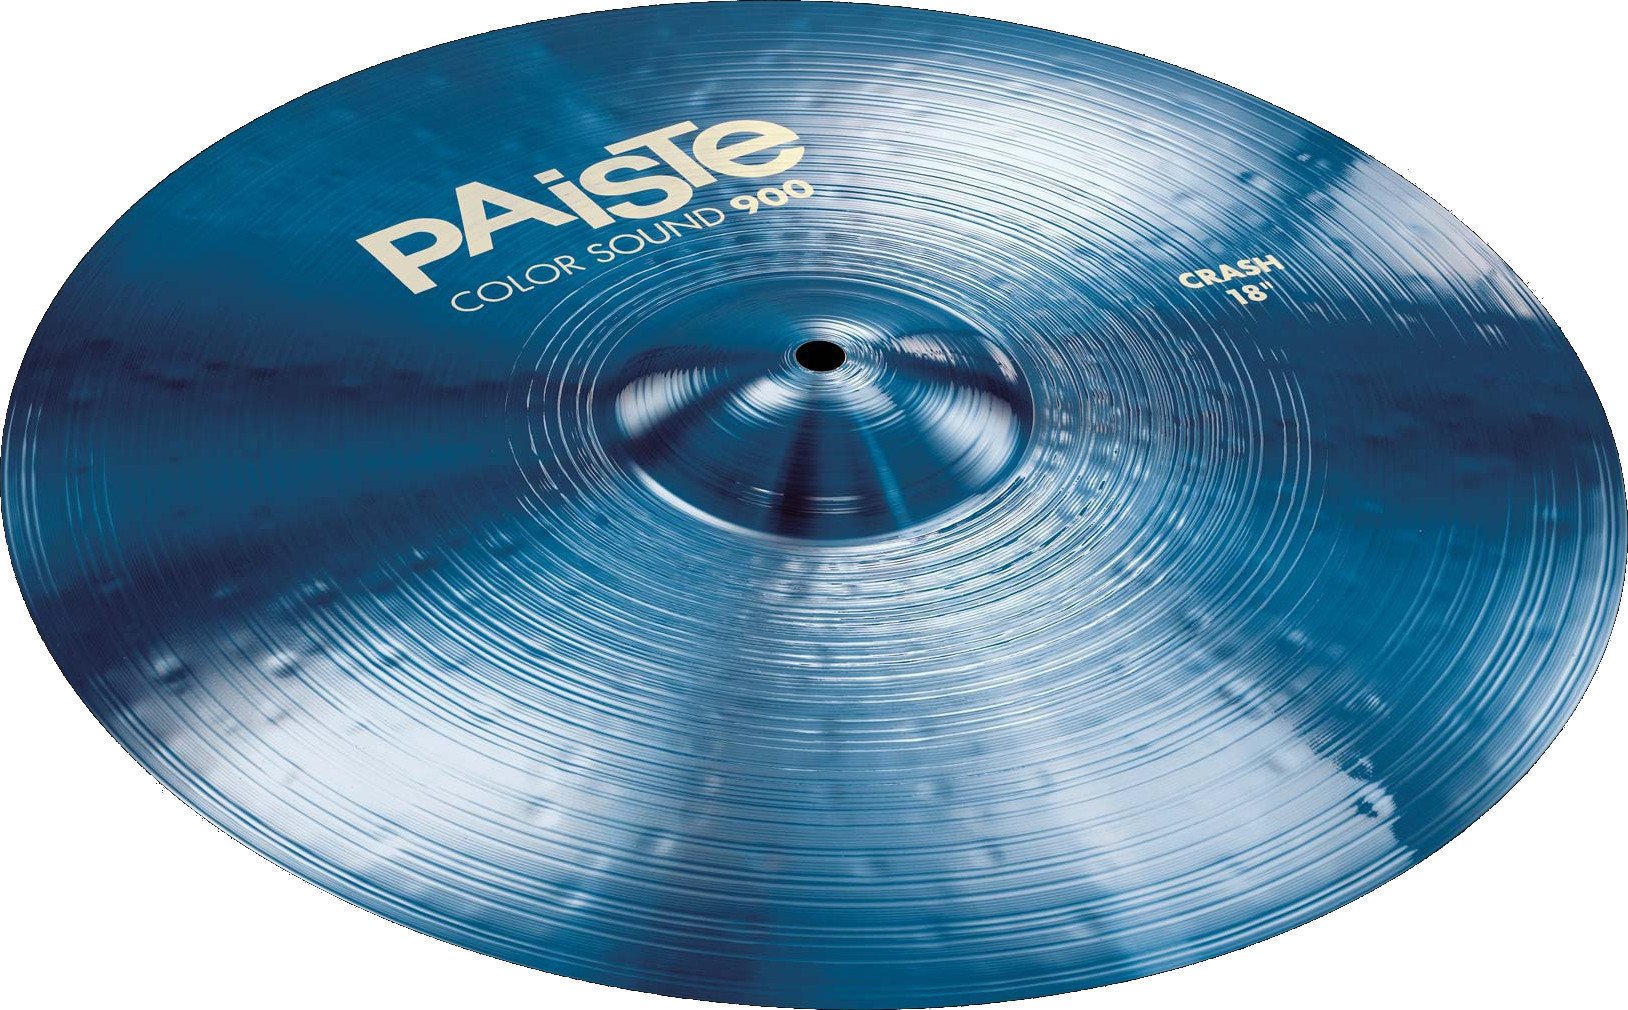 Crash Cymbal Paiste Color Sound 900 Crash Cymbal 20" Blue